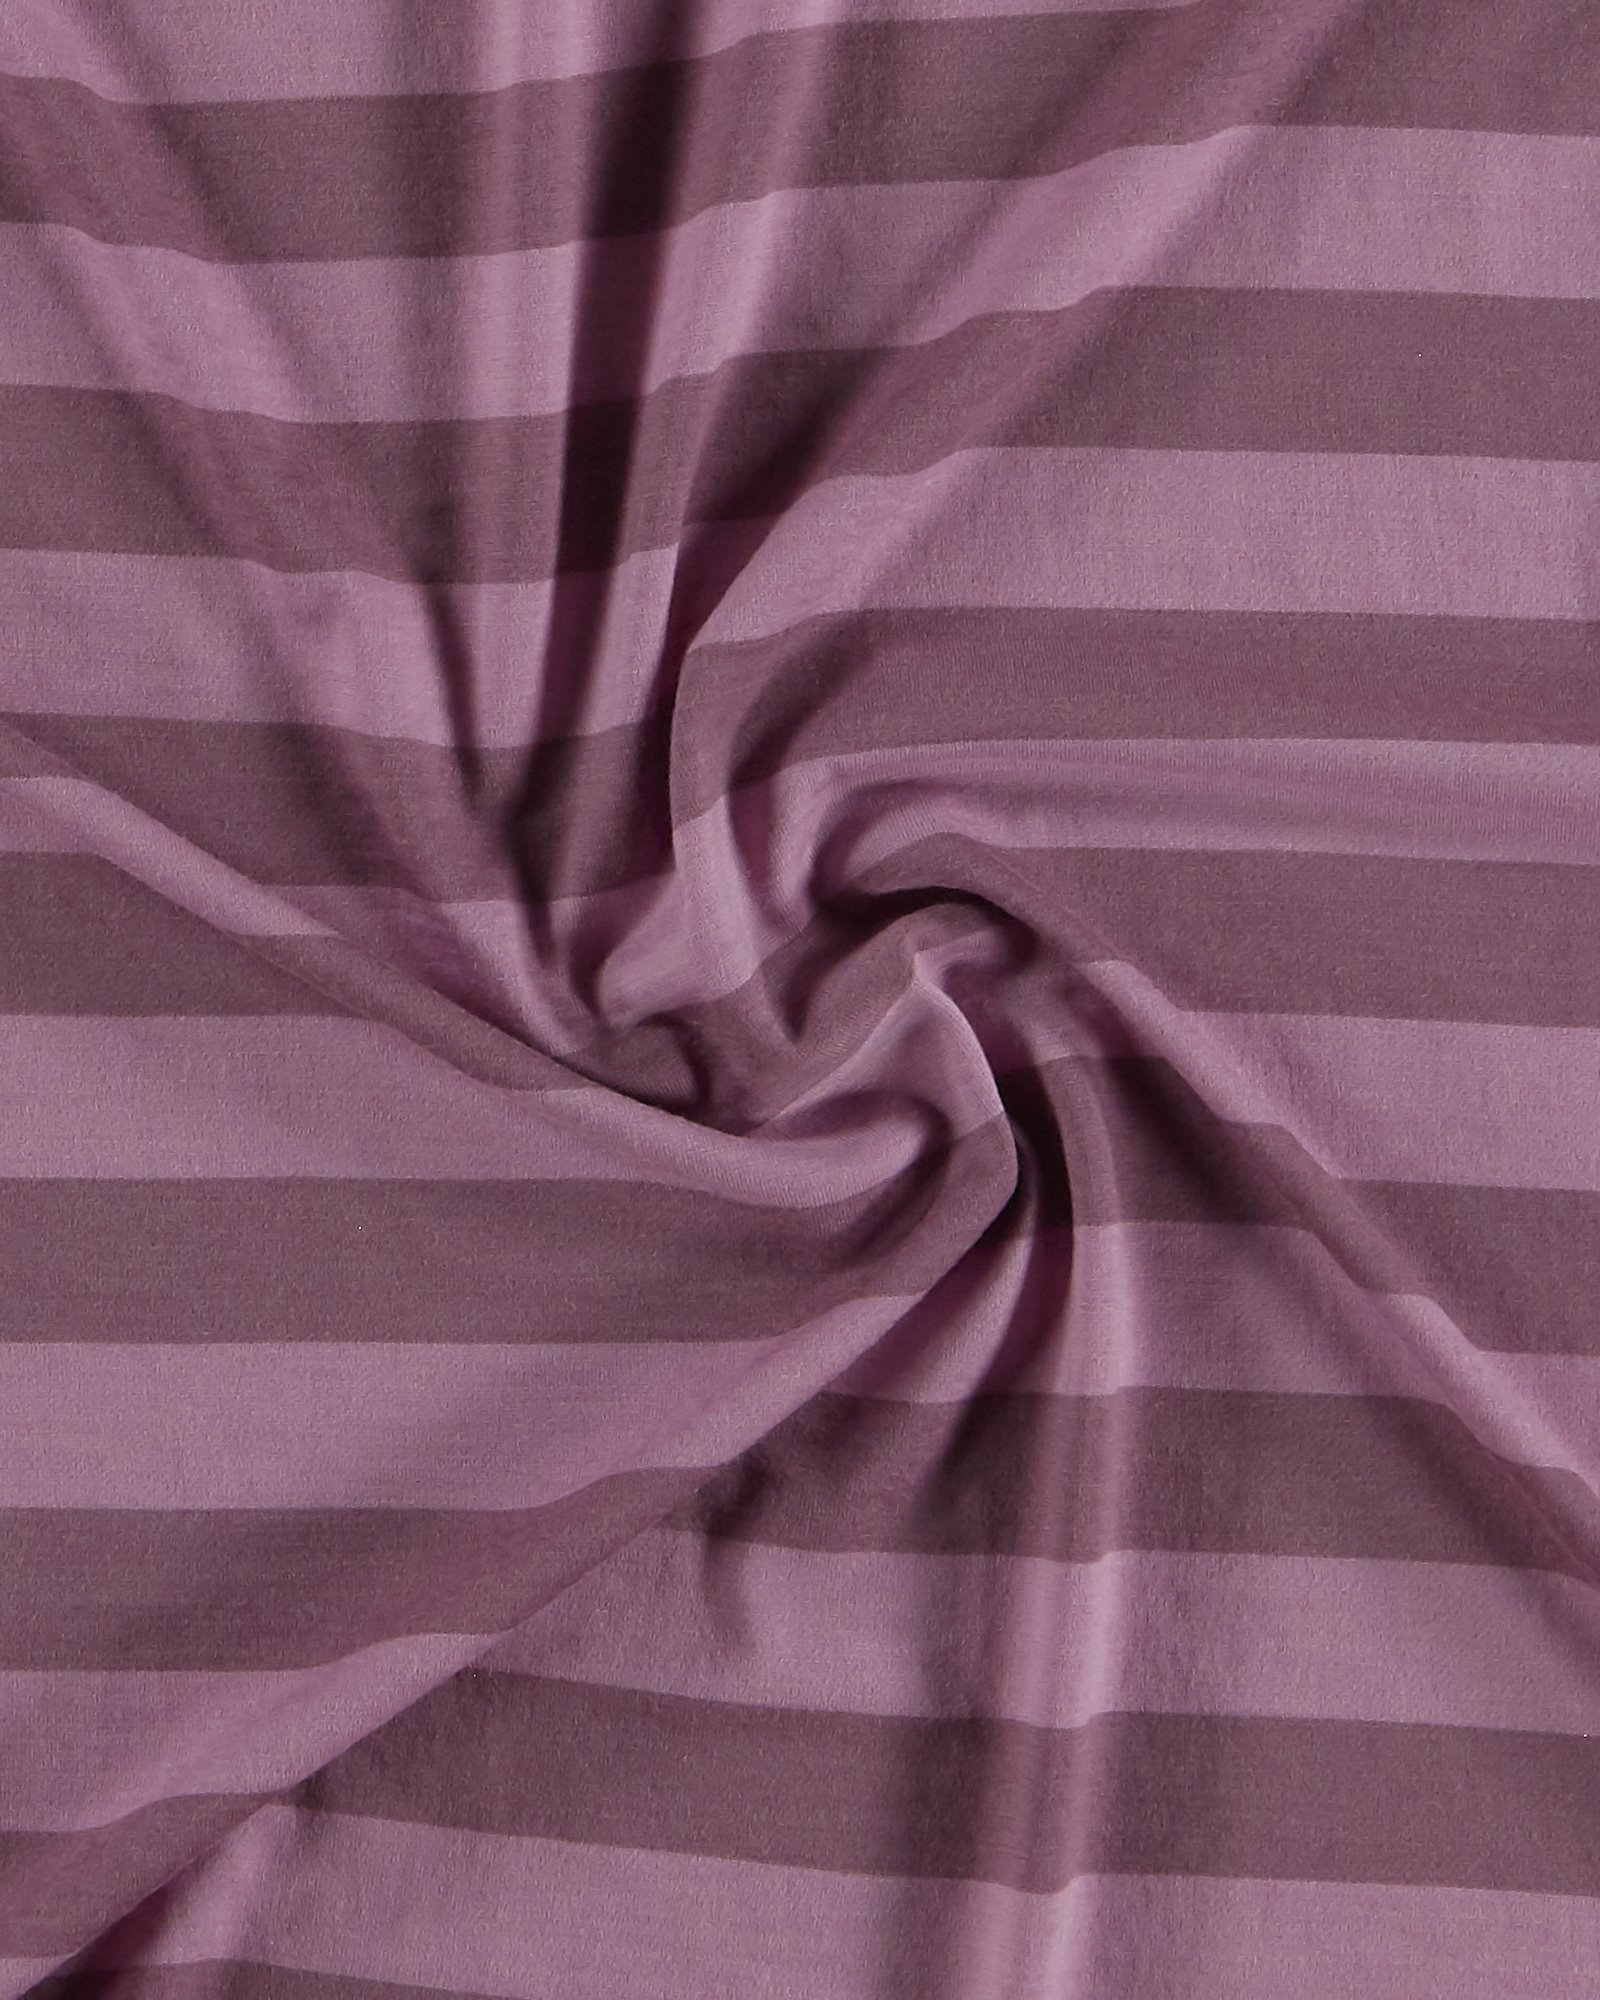 Wool jersey bordeaux/rose YD stripes 273526_pack